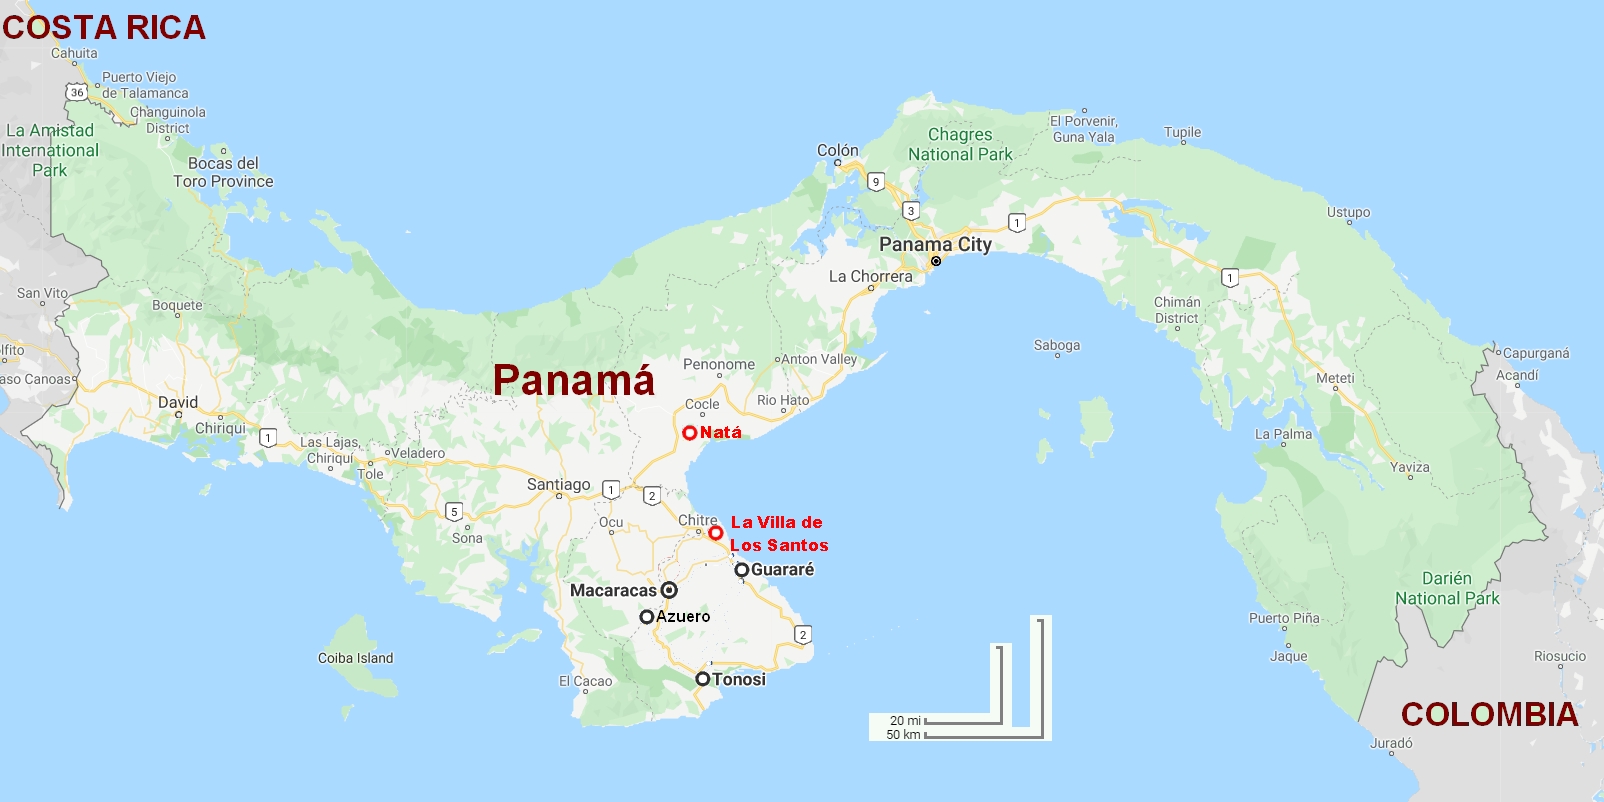 Map of Los Santos province in Panama.